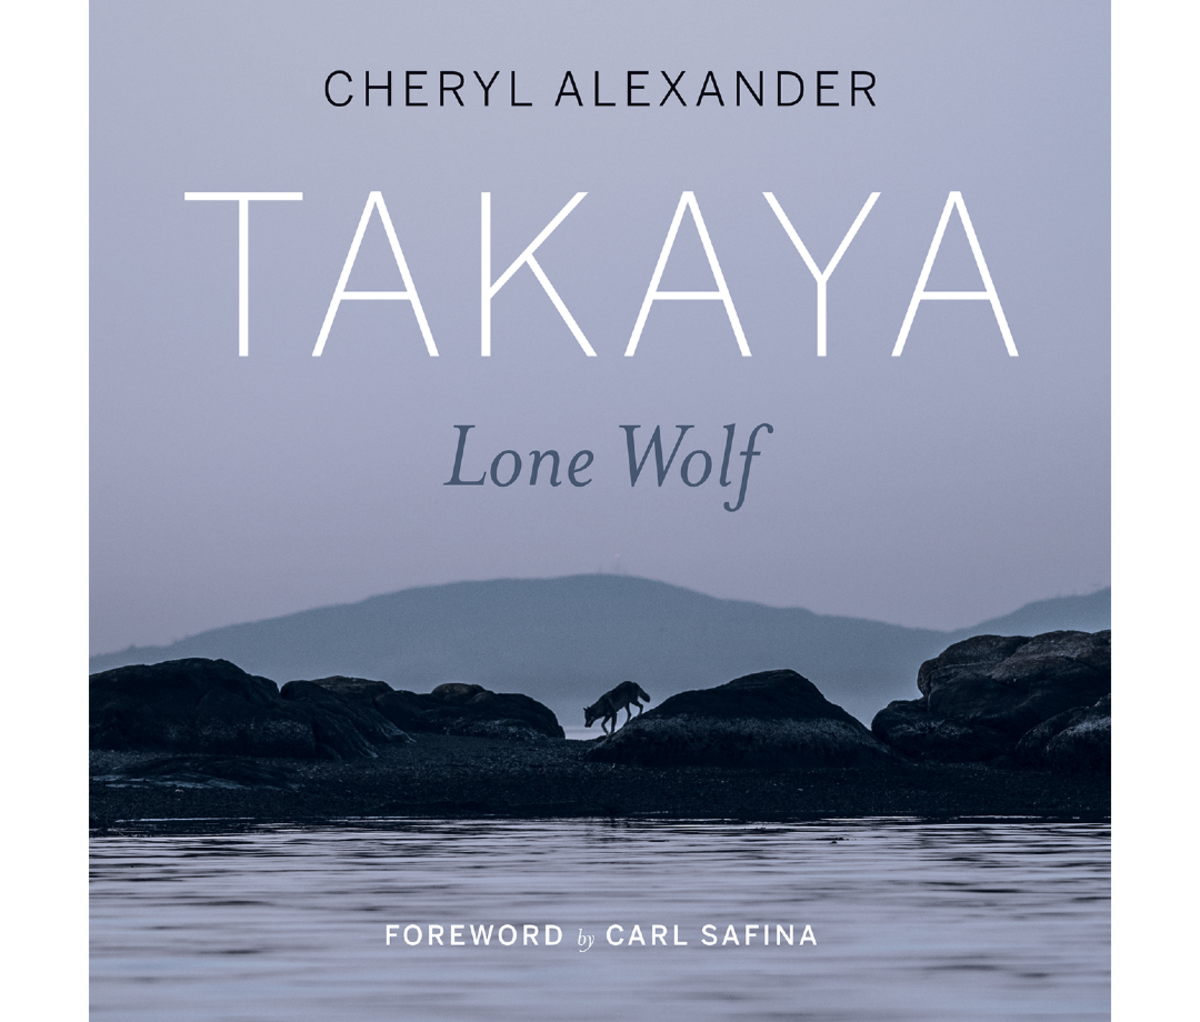 Takaya: Lone Wolf by Cheryl Alexander